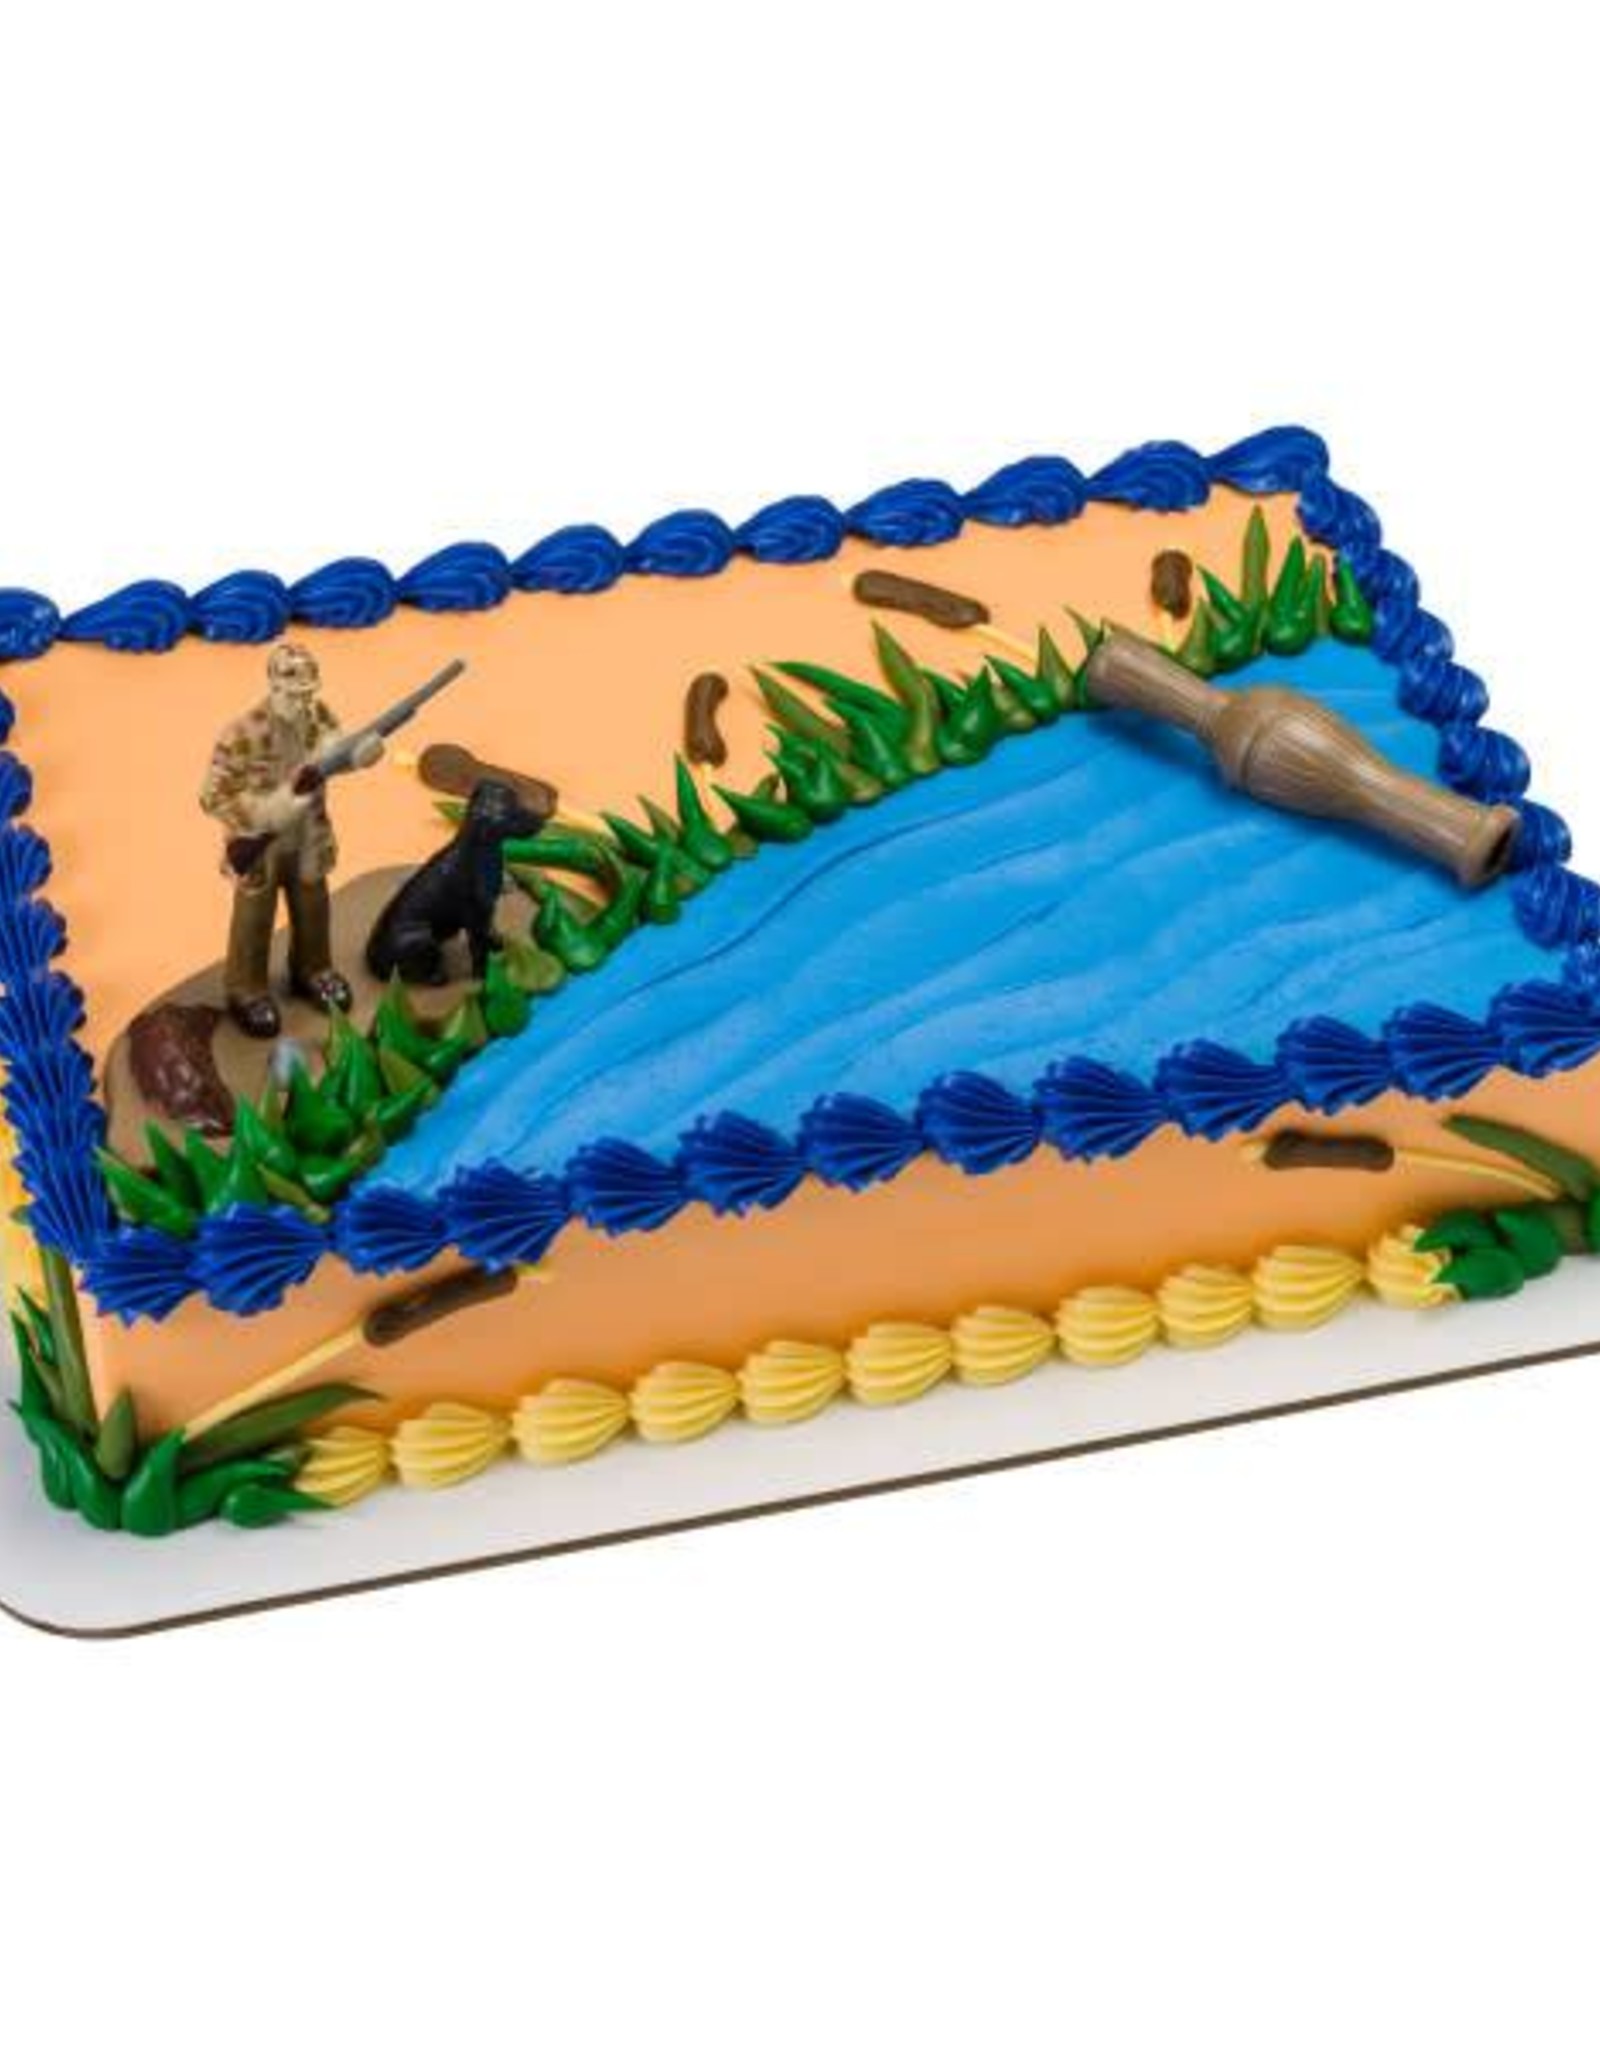 Snapklik.com : Decopac Duck Hunting DecoSet Cake Decoration Topper